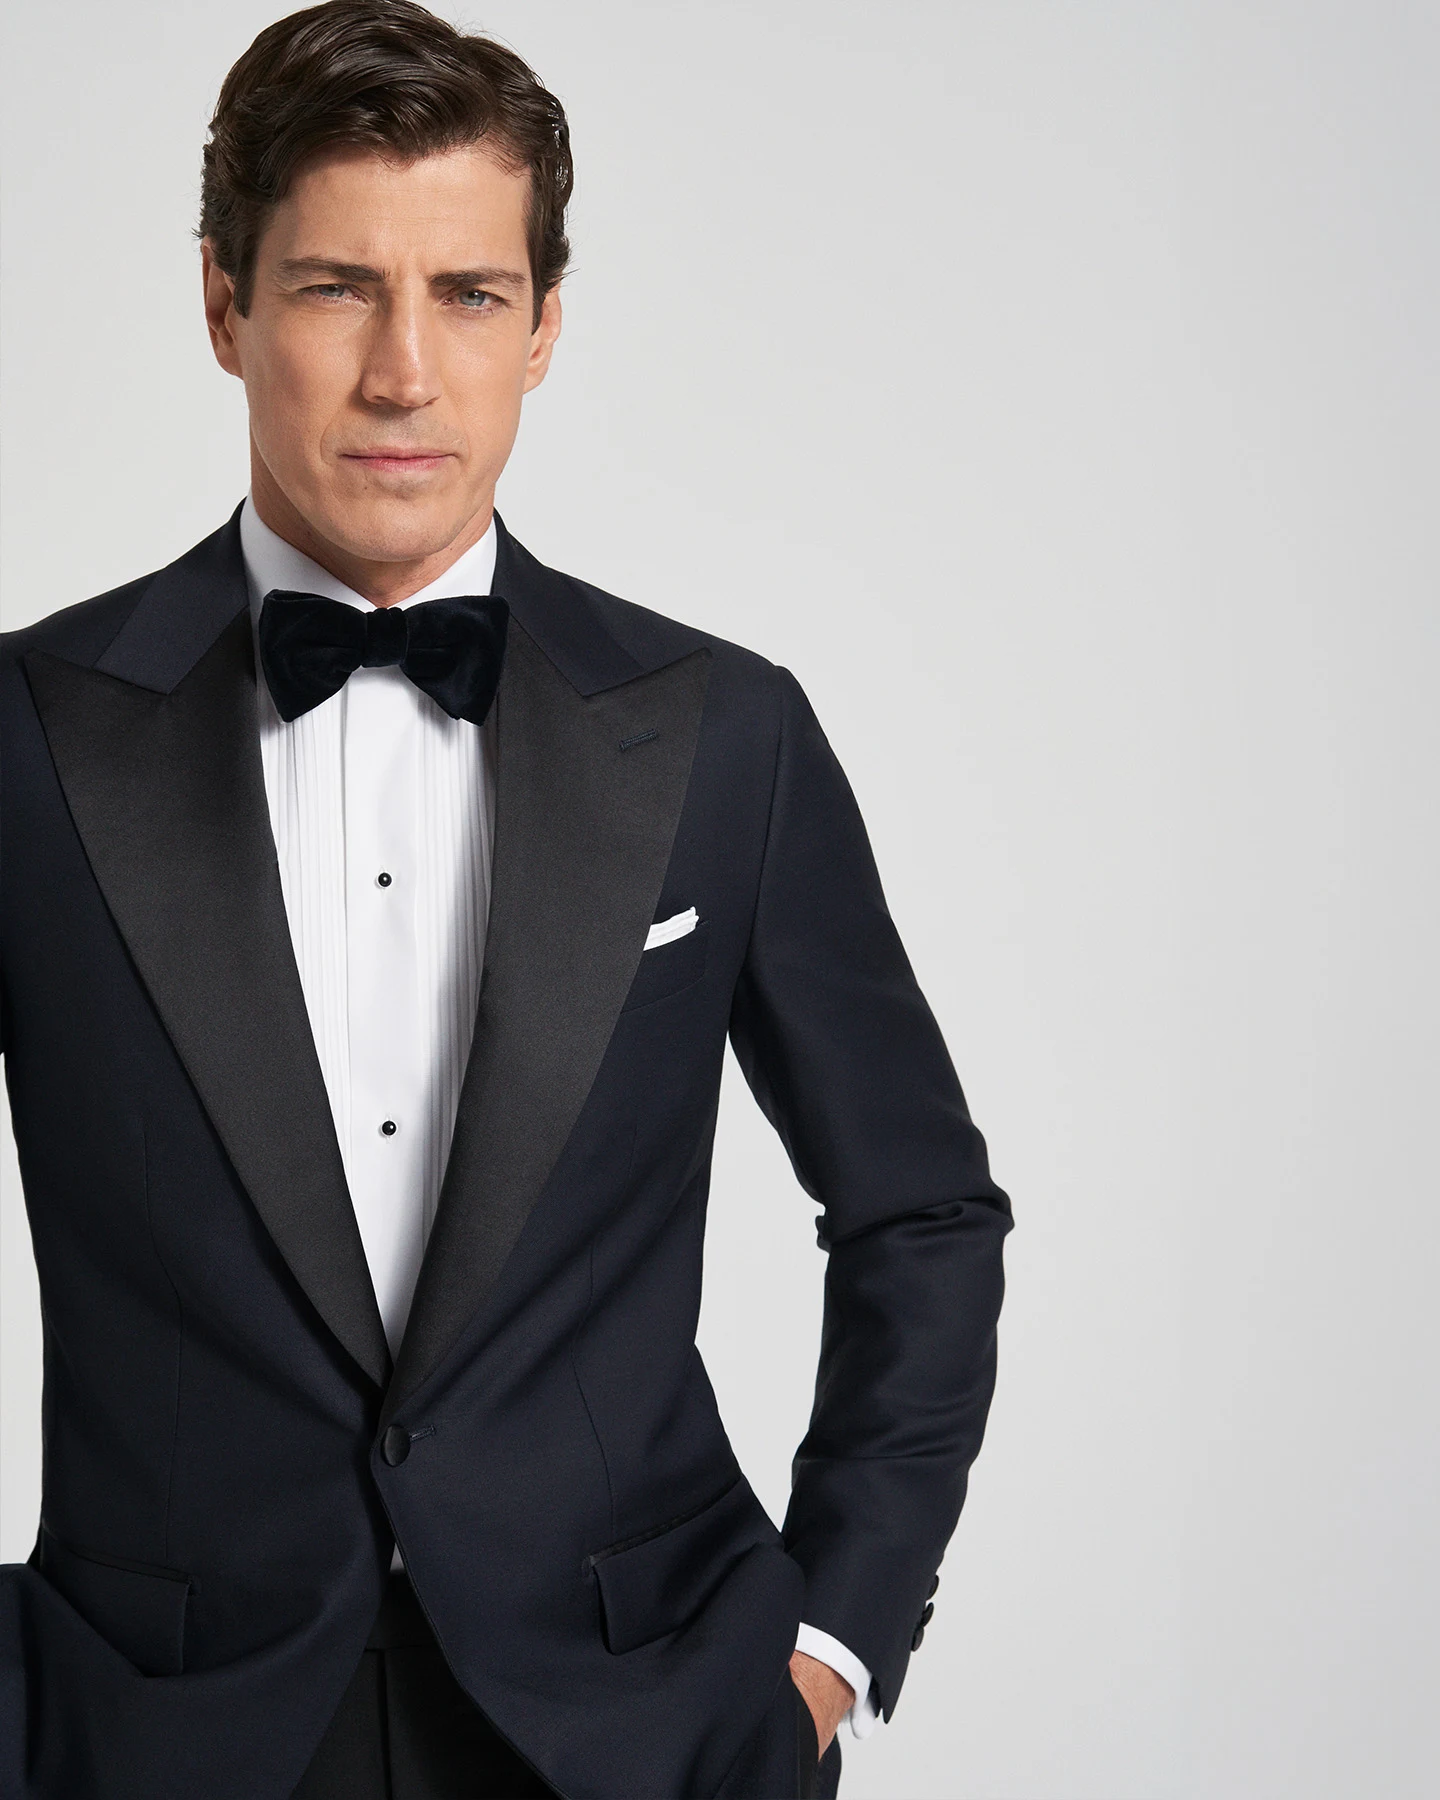 black tie dress code model